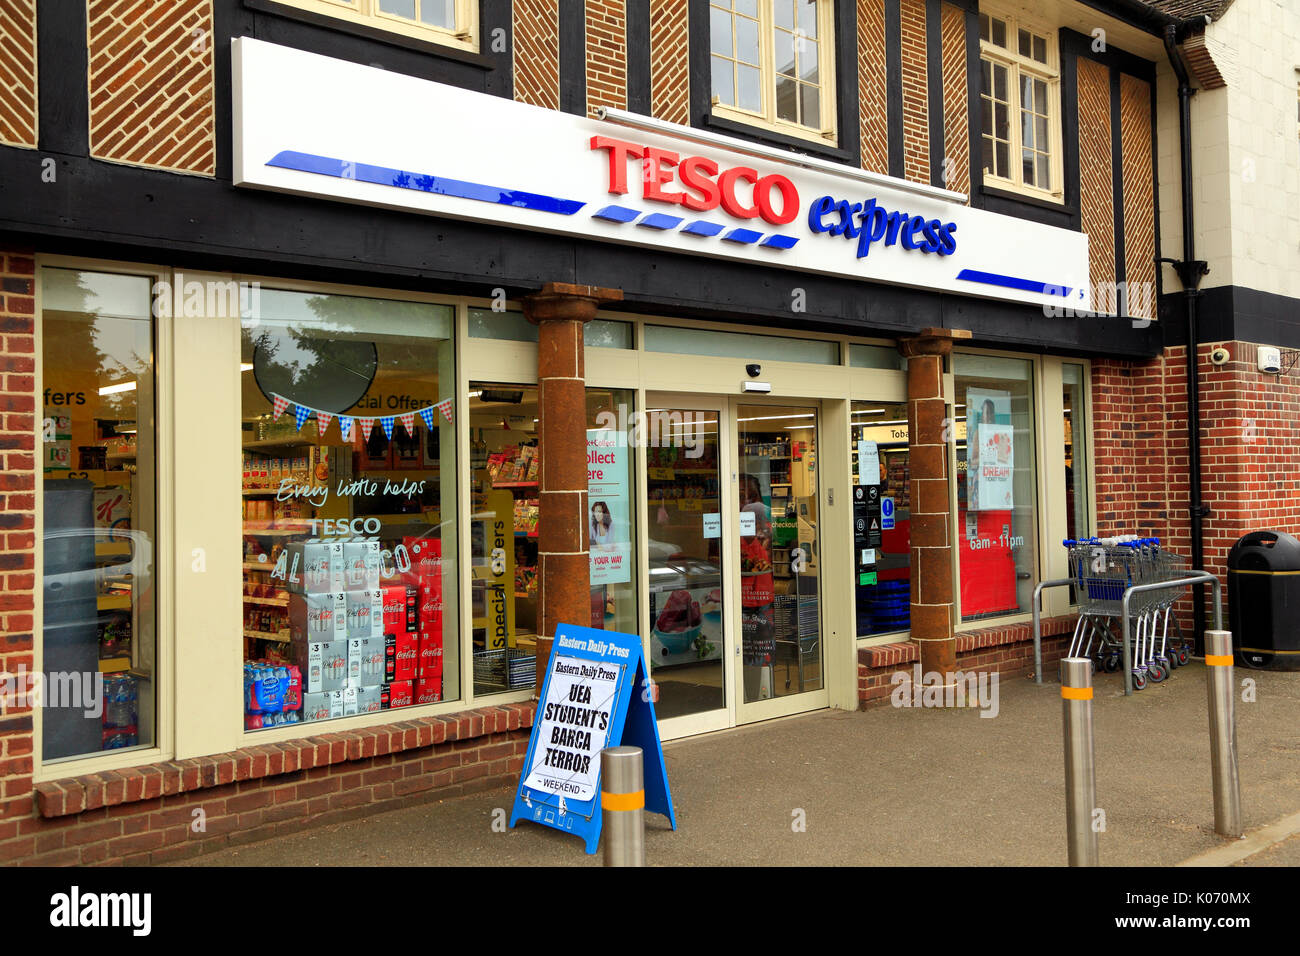 Tesco Express, mini supermarket, Heacham, Norfolk, England, UK, English supermarkets, stores, shops Stock Photo